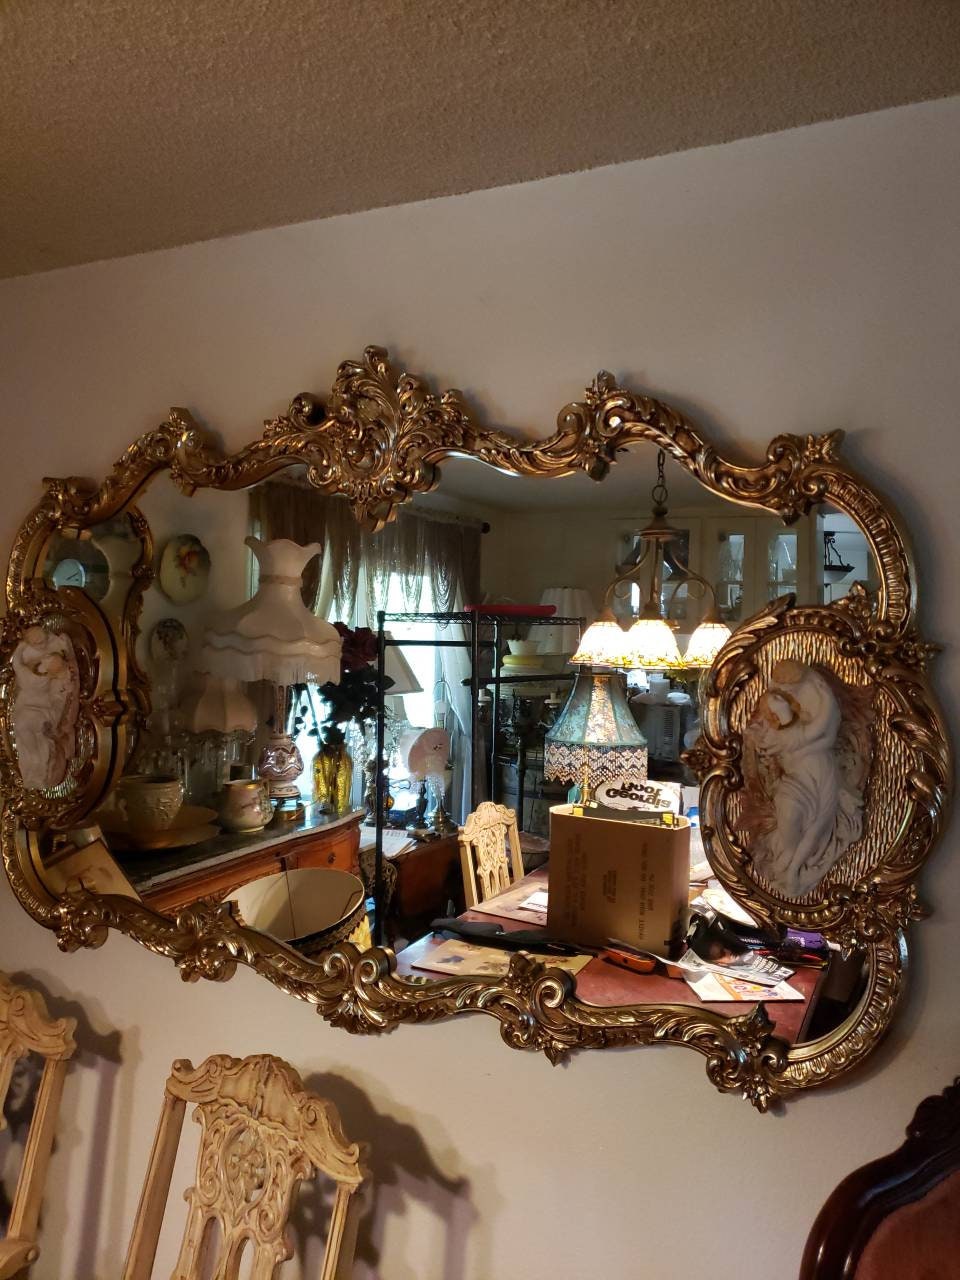 Gold Vanity Mirrors Frame Gold Vanity Mirror Office Desk Handheld Vintge  Small Bulk Aestetic Round Shower Living Room Resin Wanddeko Home Design  ZJ50 From Bianqueli, $83.62